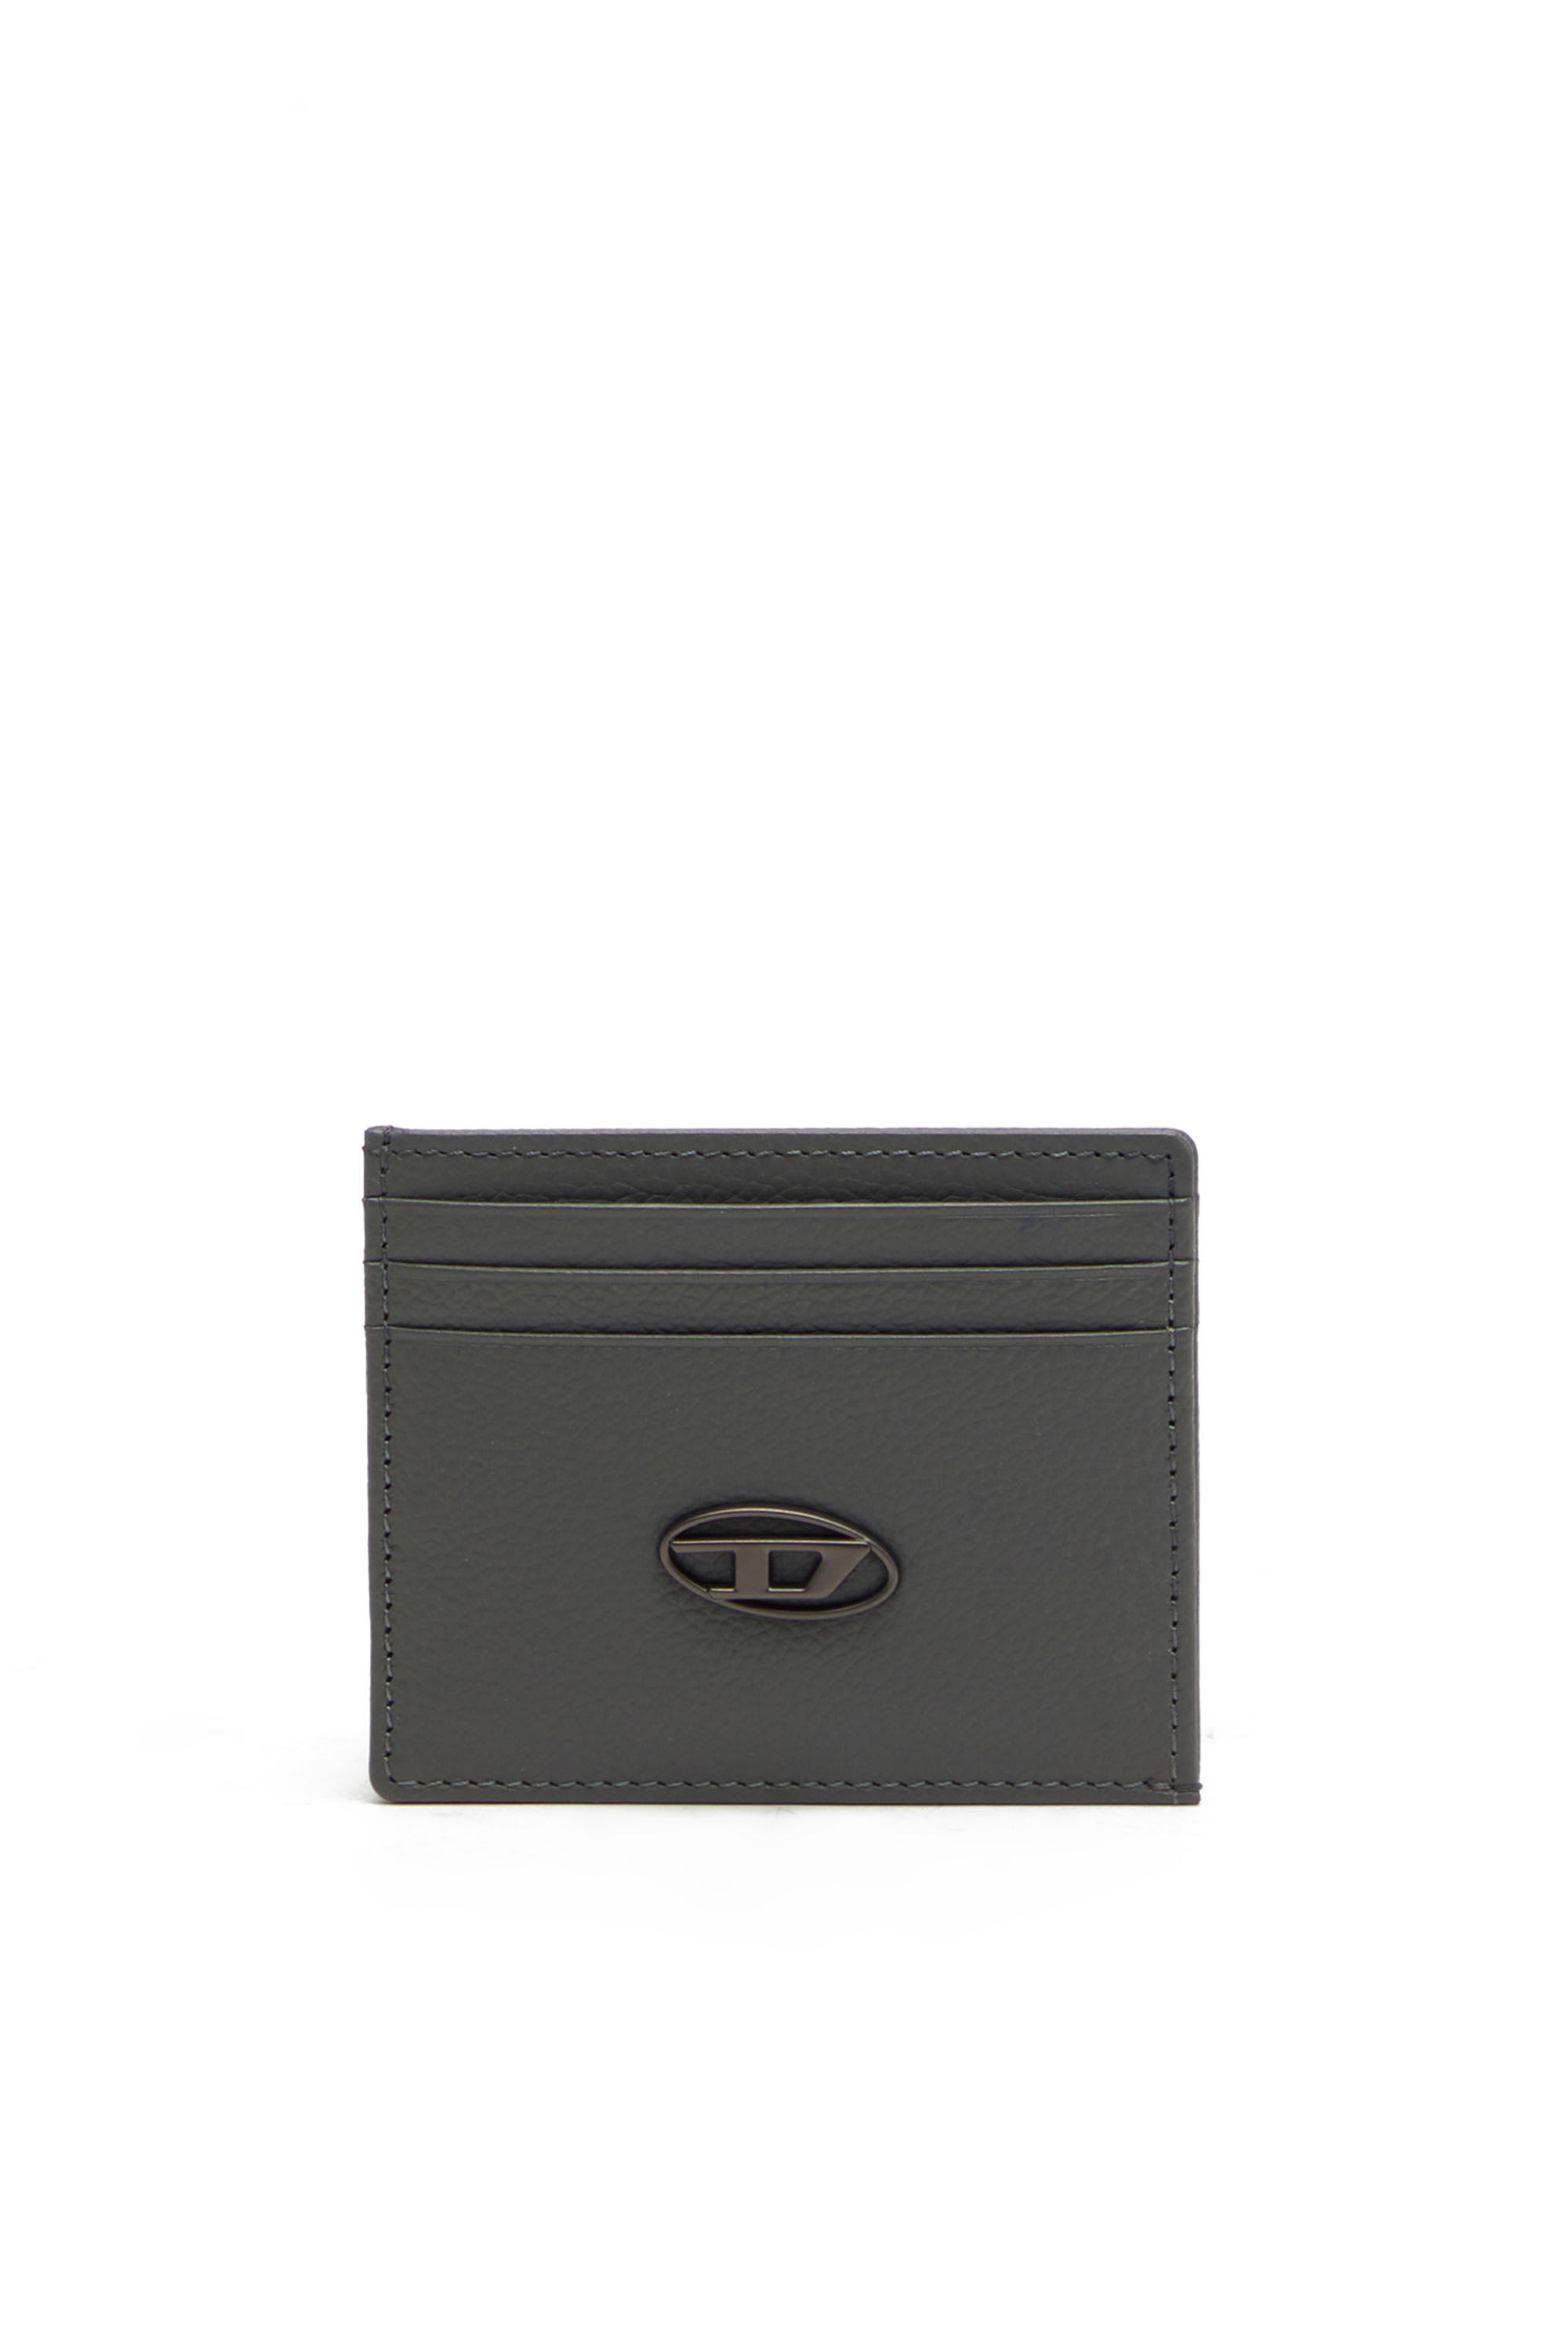 Diesel - CARD CASE, ダークグレー - Image 1